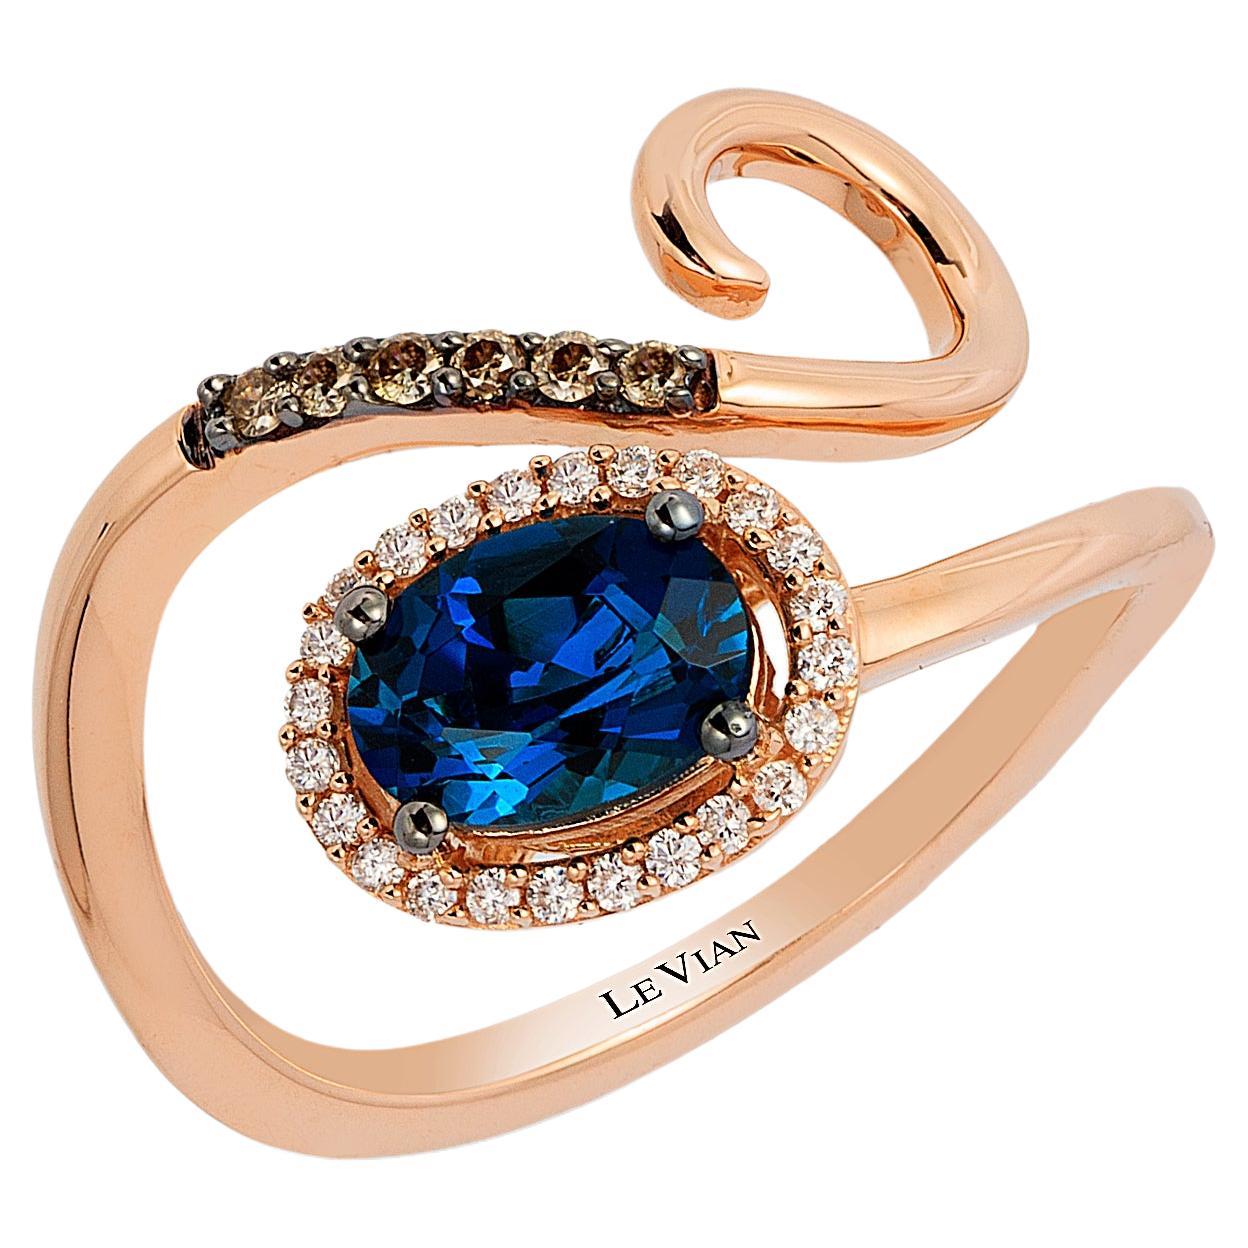 Levian 14K Rose Gold Blue Topaz White Chocolate Diamond Fashion Ring Size 7 For Sale